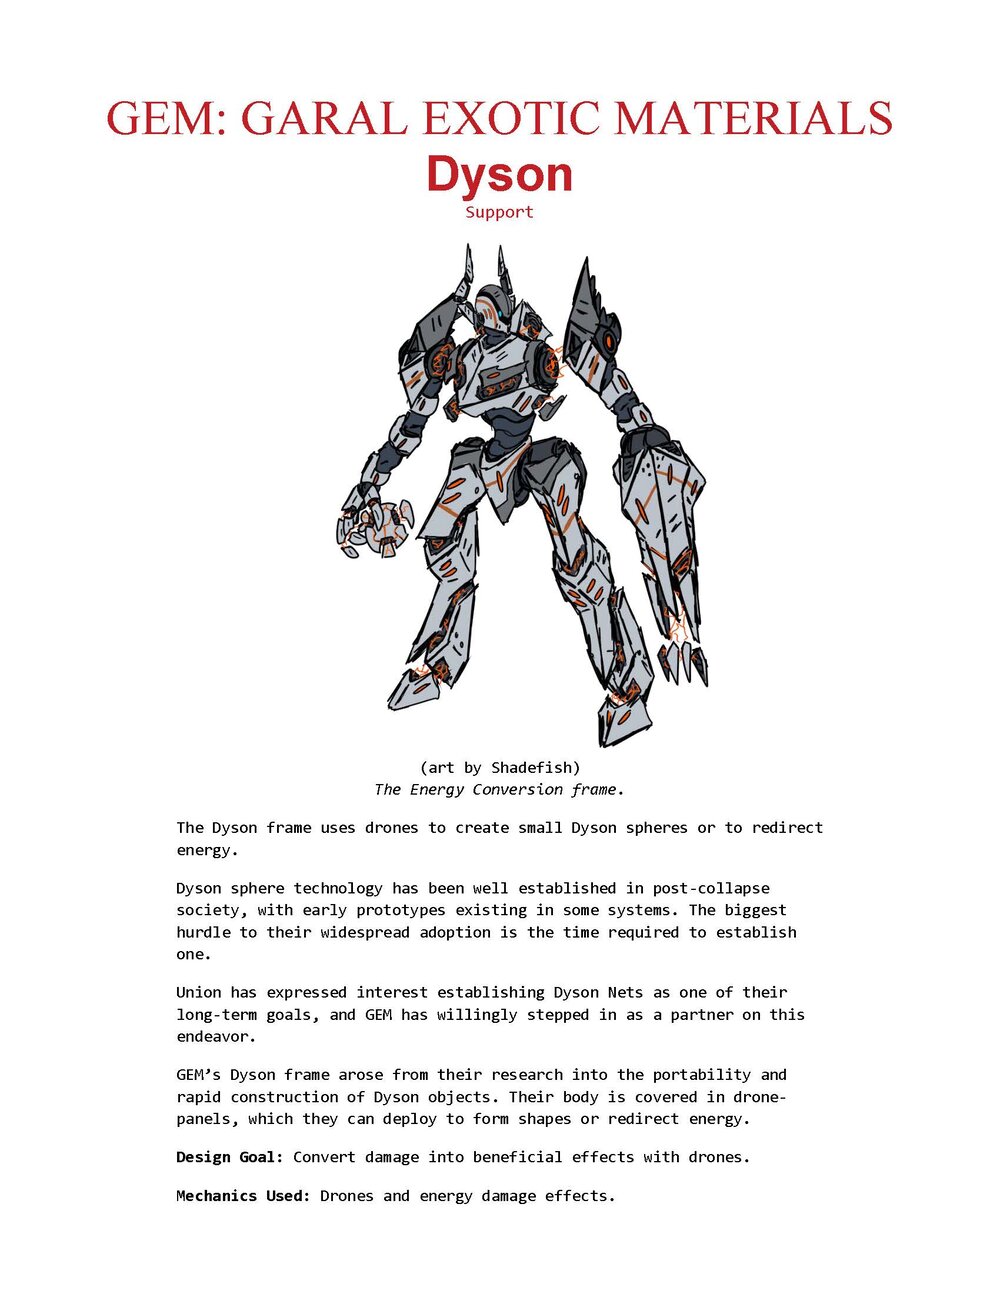 lancer homebrew Dyson v1.0_Page_1.jpg